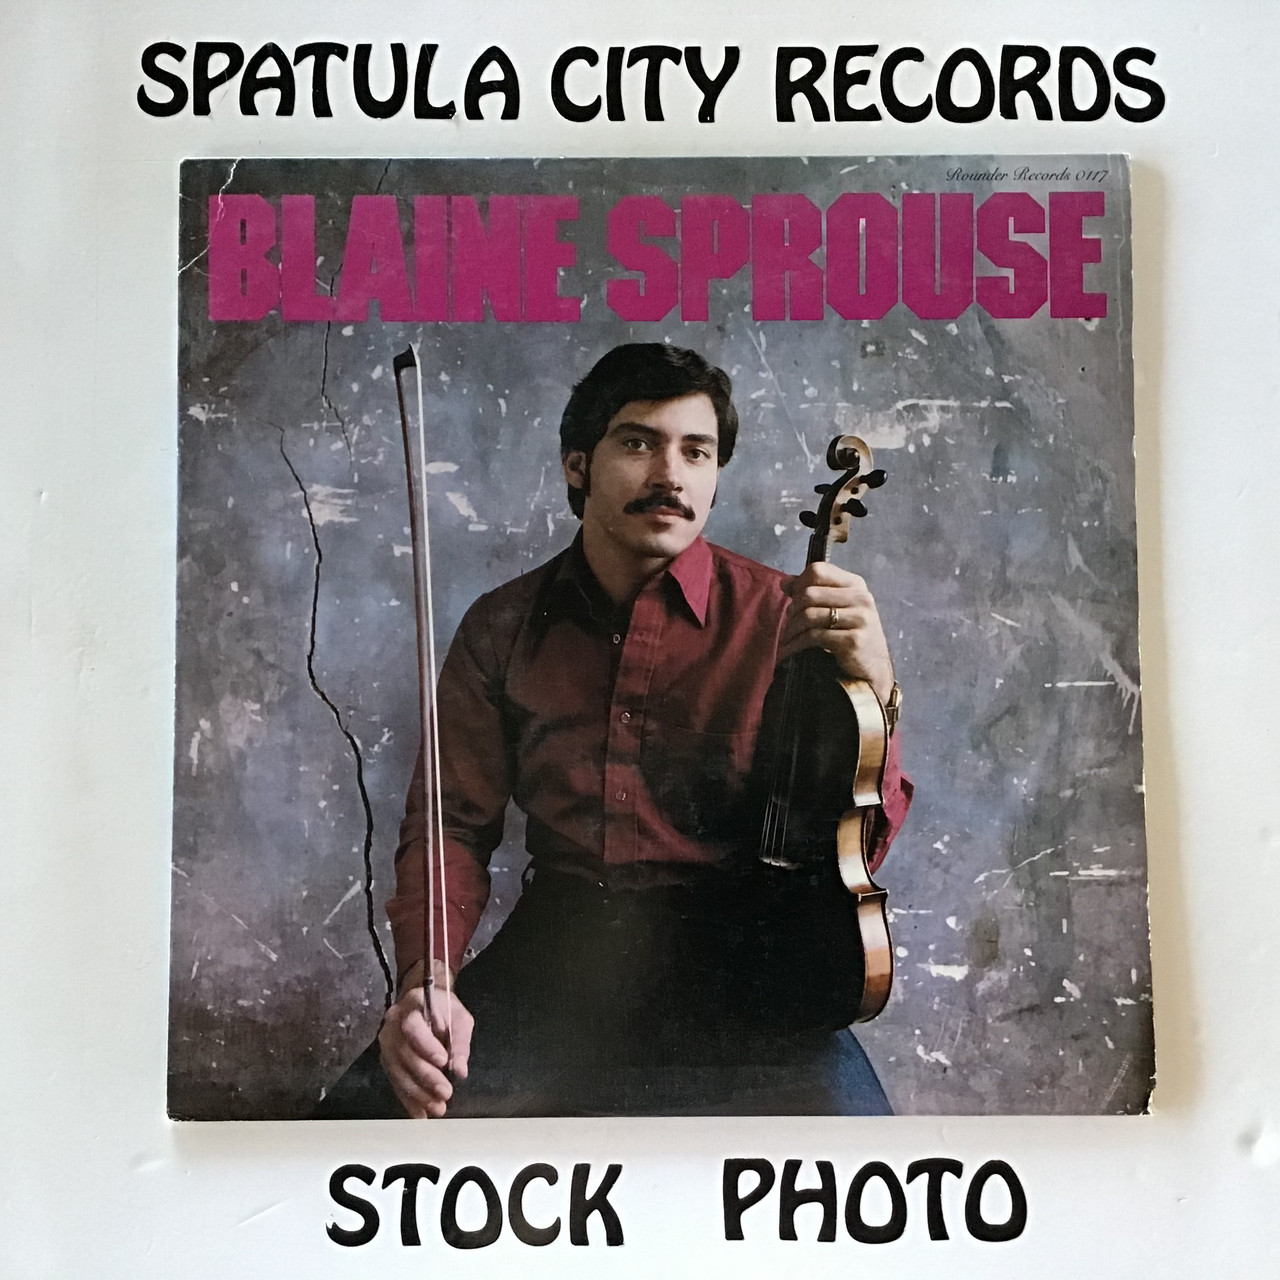 Blaine Sprouse - Blaine Sprouse - vinyl record LP